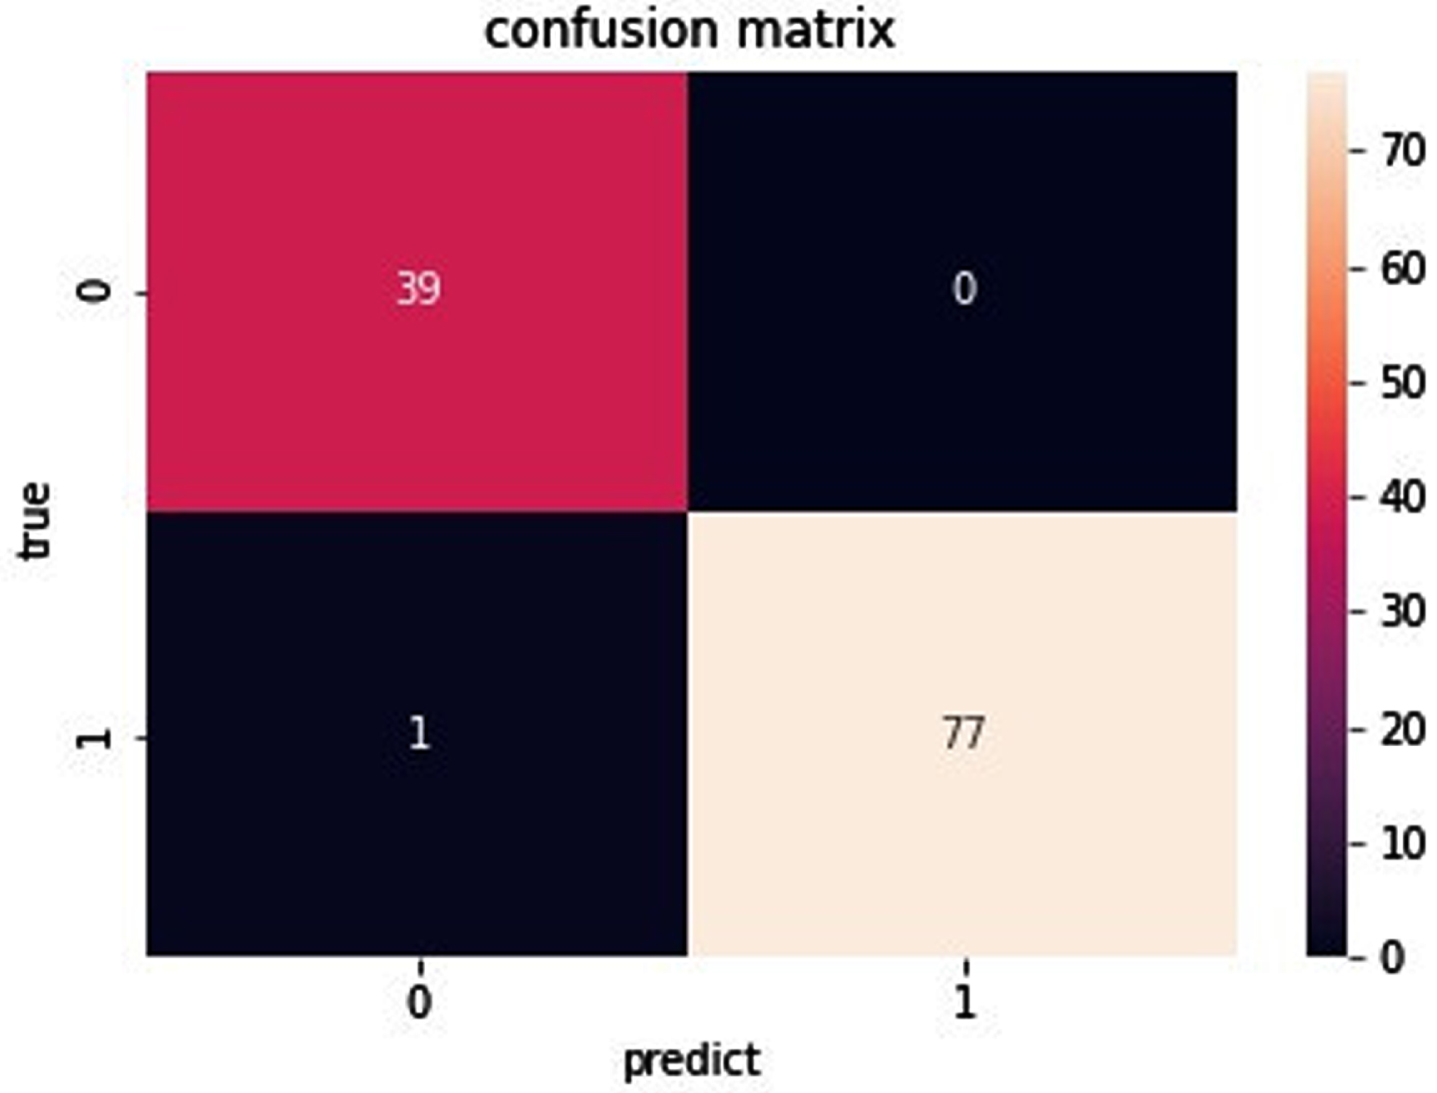 Confusion matrix of data set Ionosphere.